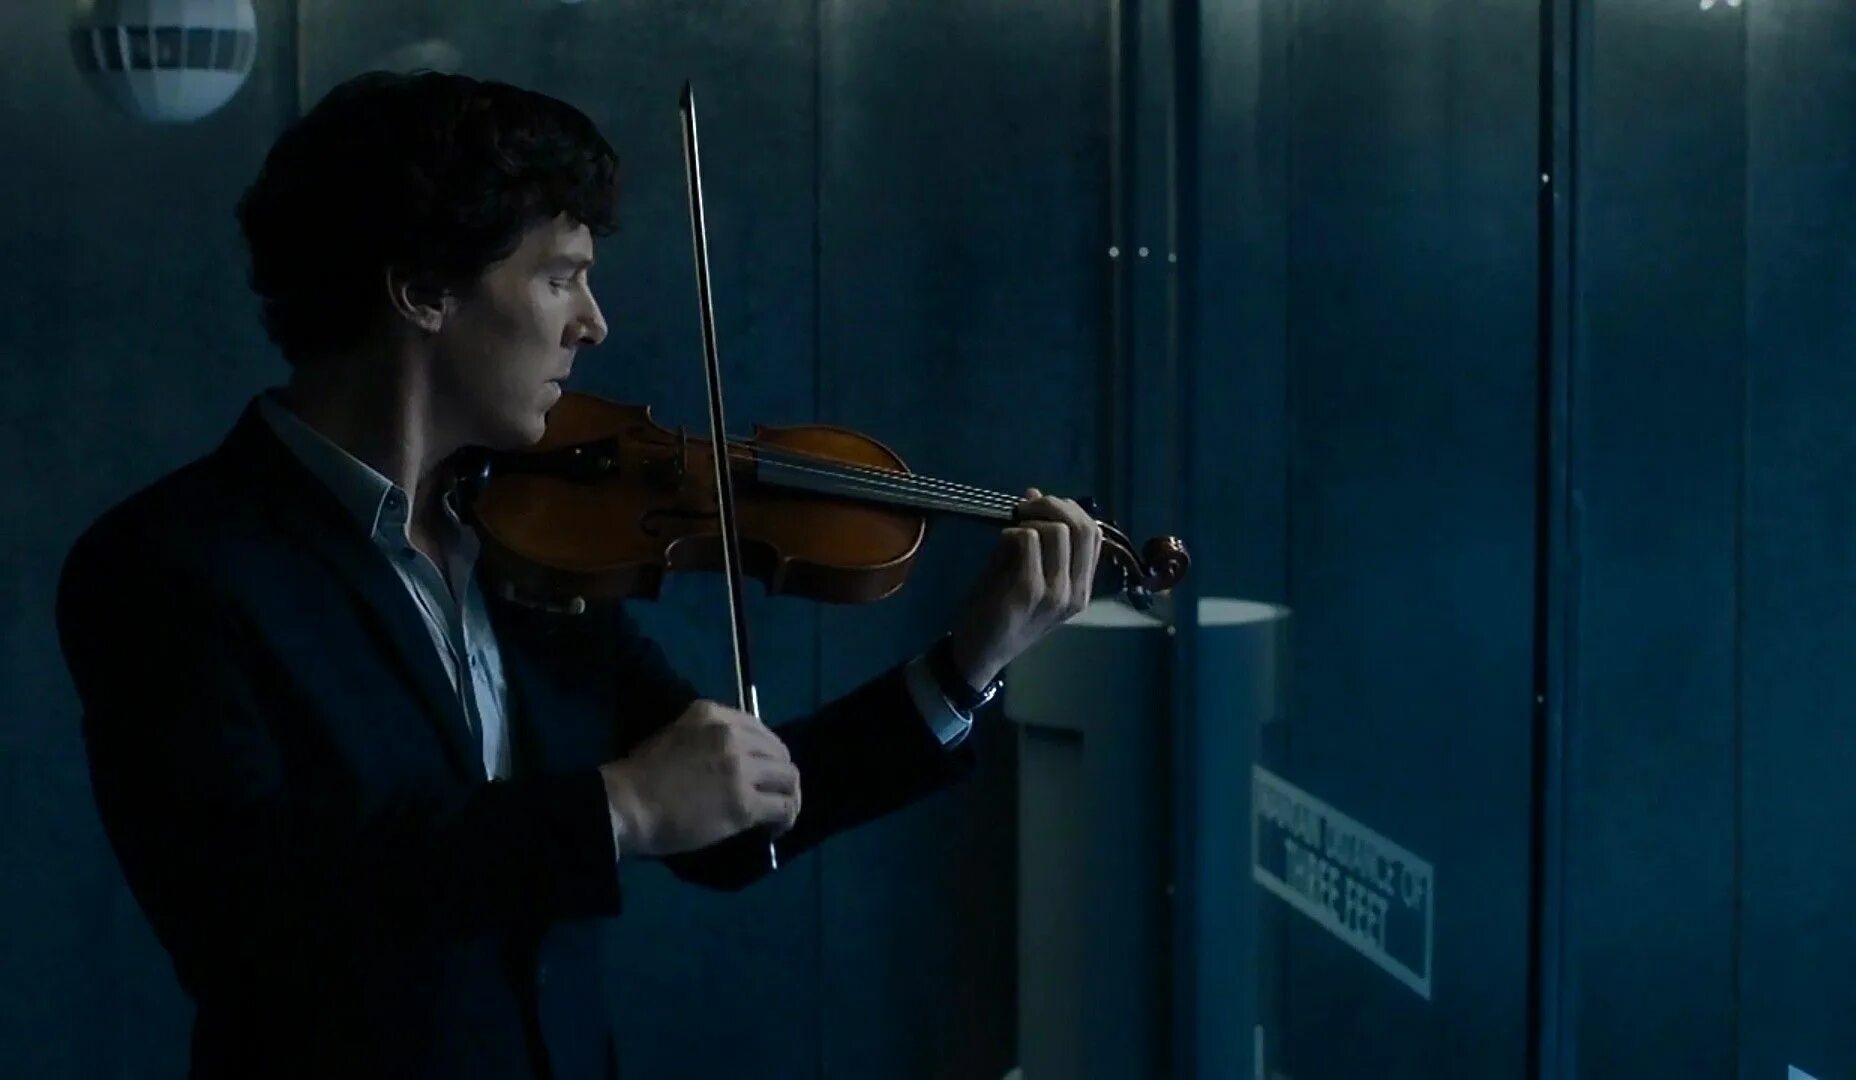 He plays the violin better. Холмс скрипка Камбербэтч.